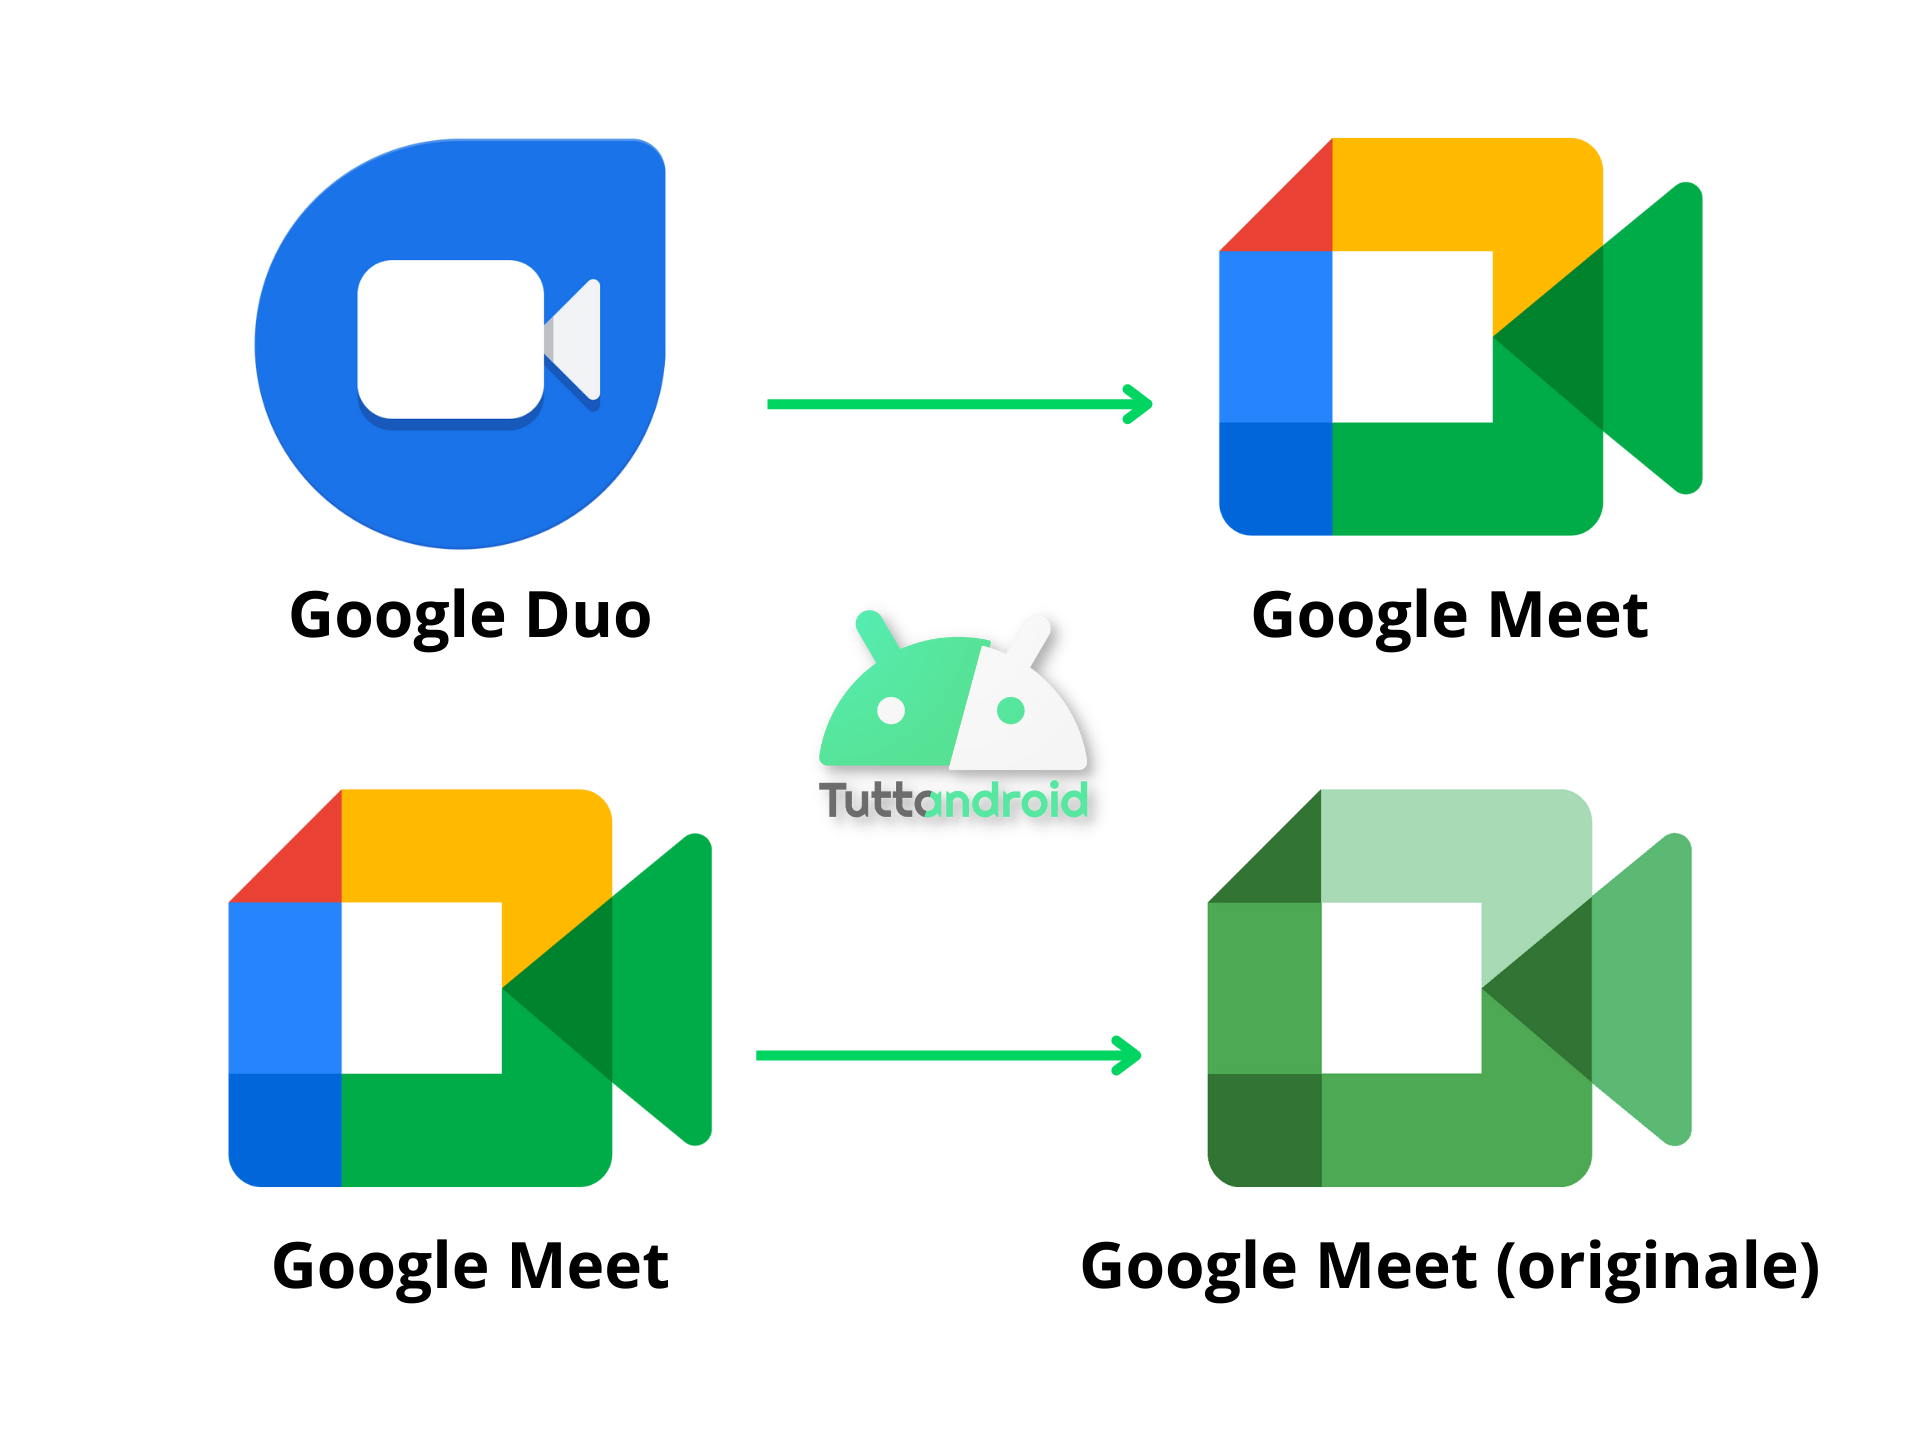 Google Duo diventa Google Meet e Google Meet diventa Google Meet (originale)